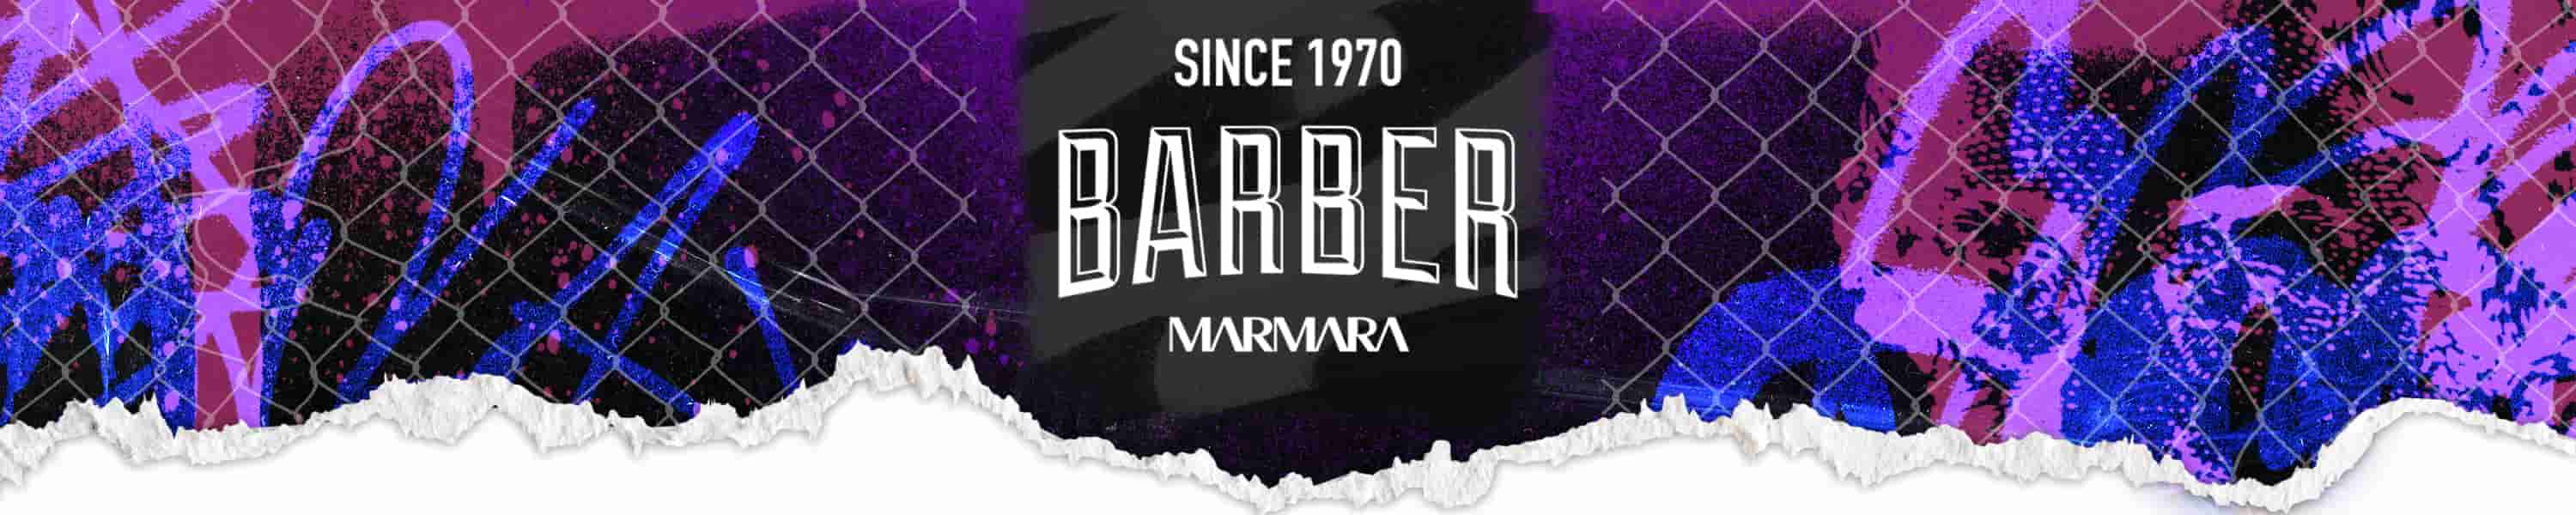 marmara-barber-slickstyle-min